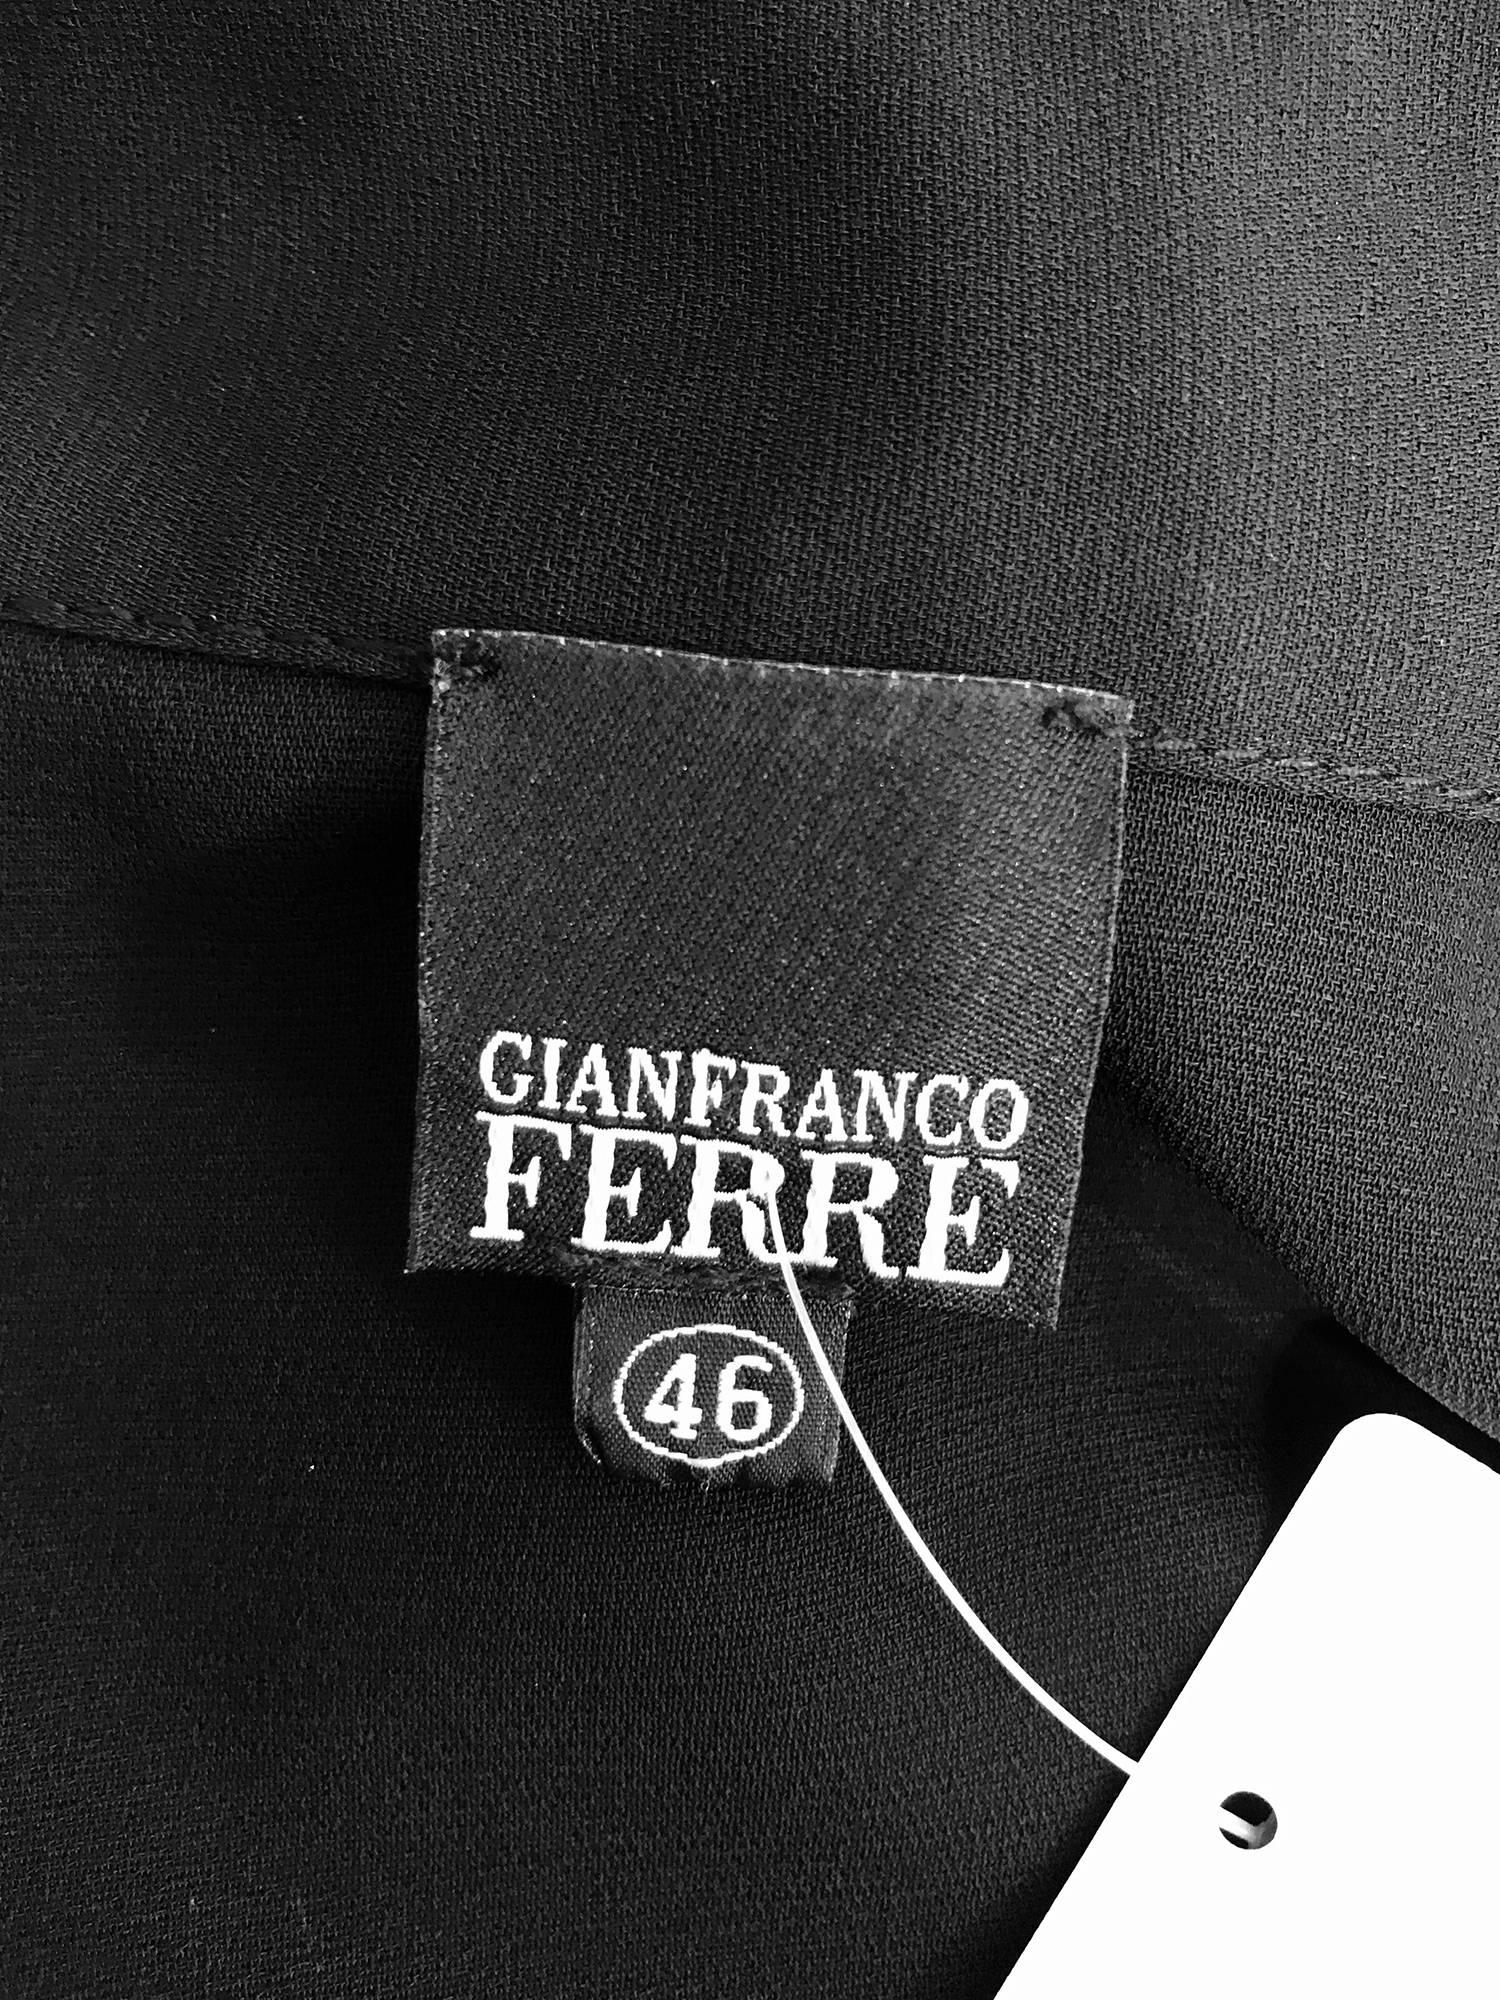 Gianfranco Ferre black crepe laser cut long sleeve button front top 5